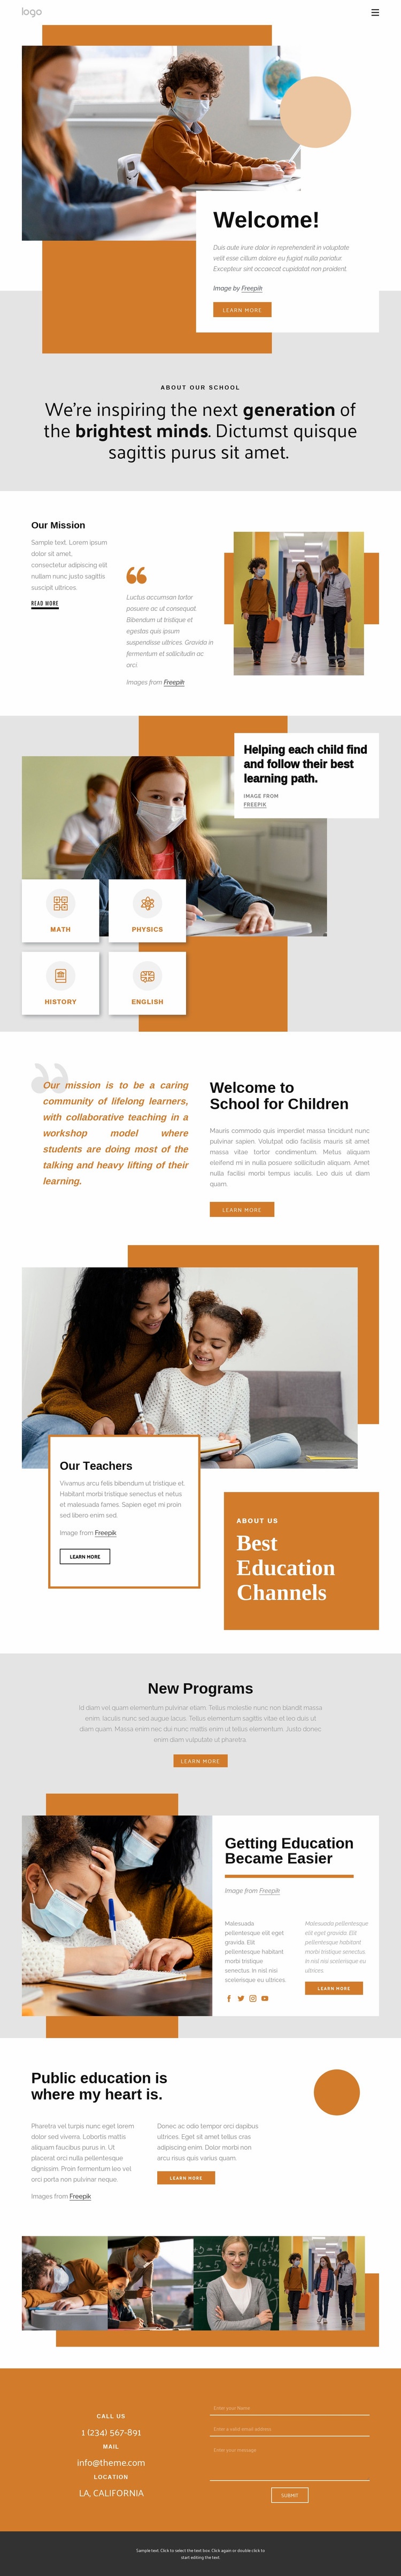 Primary school Homepage Design